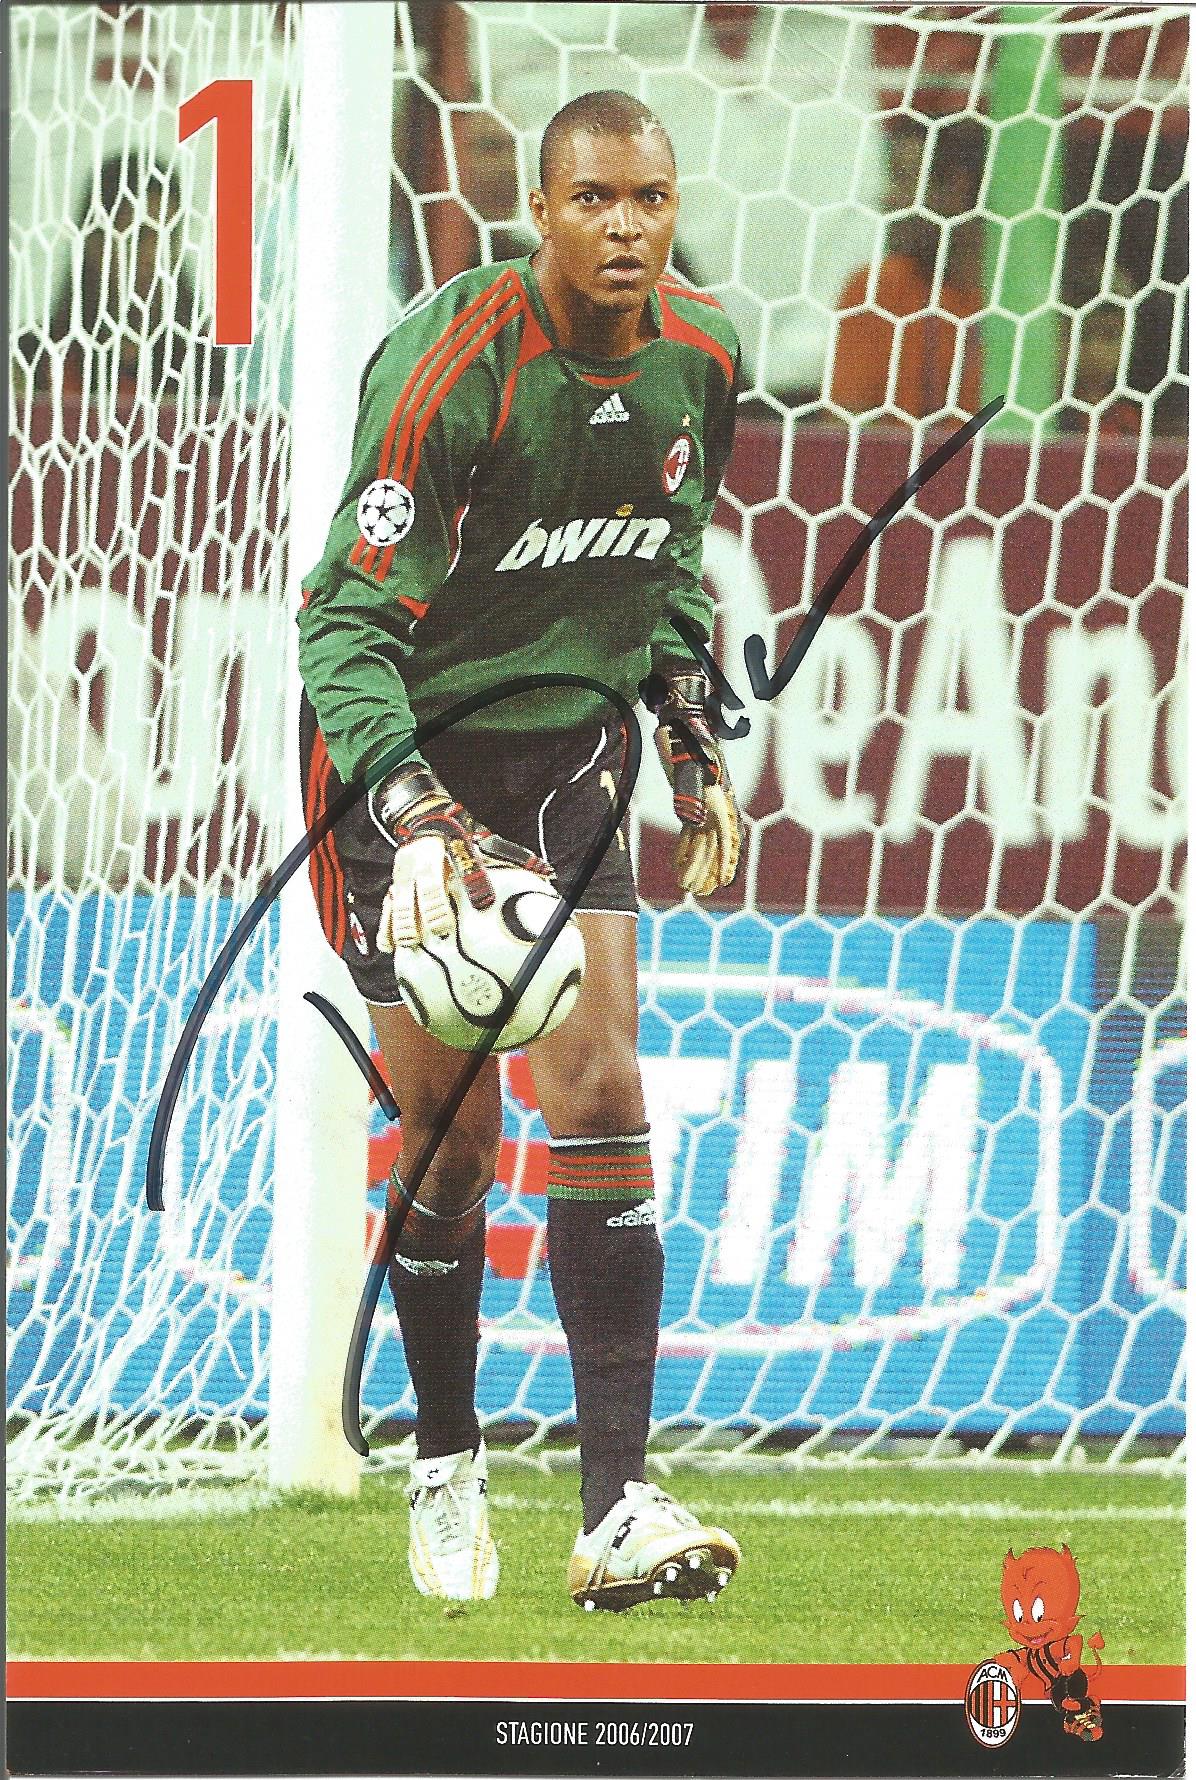 Dida signed 6x4 AC Milan colour promo photo. Nelson de Jesus Silva (born 7 October 1973), better